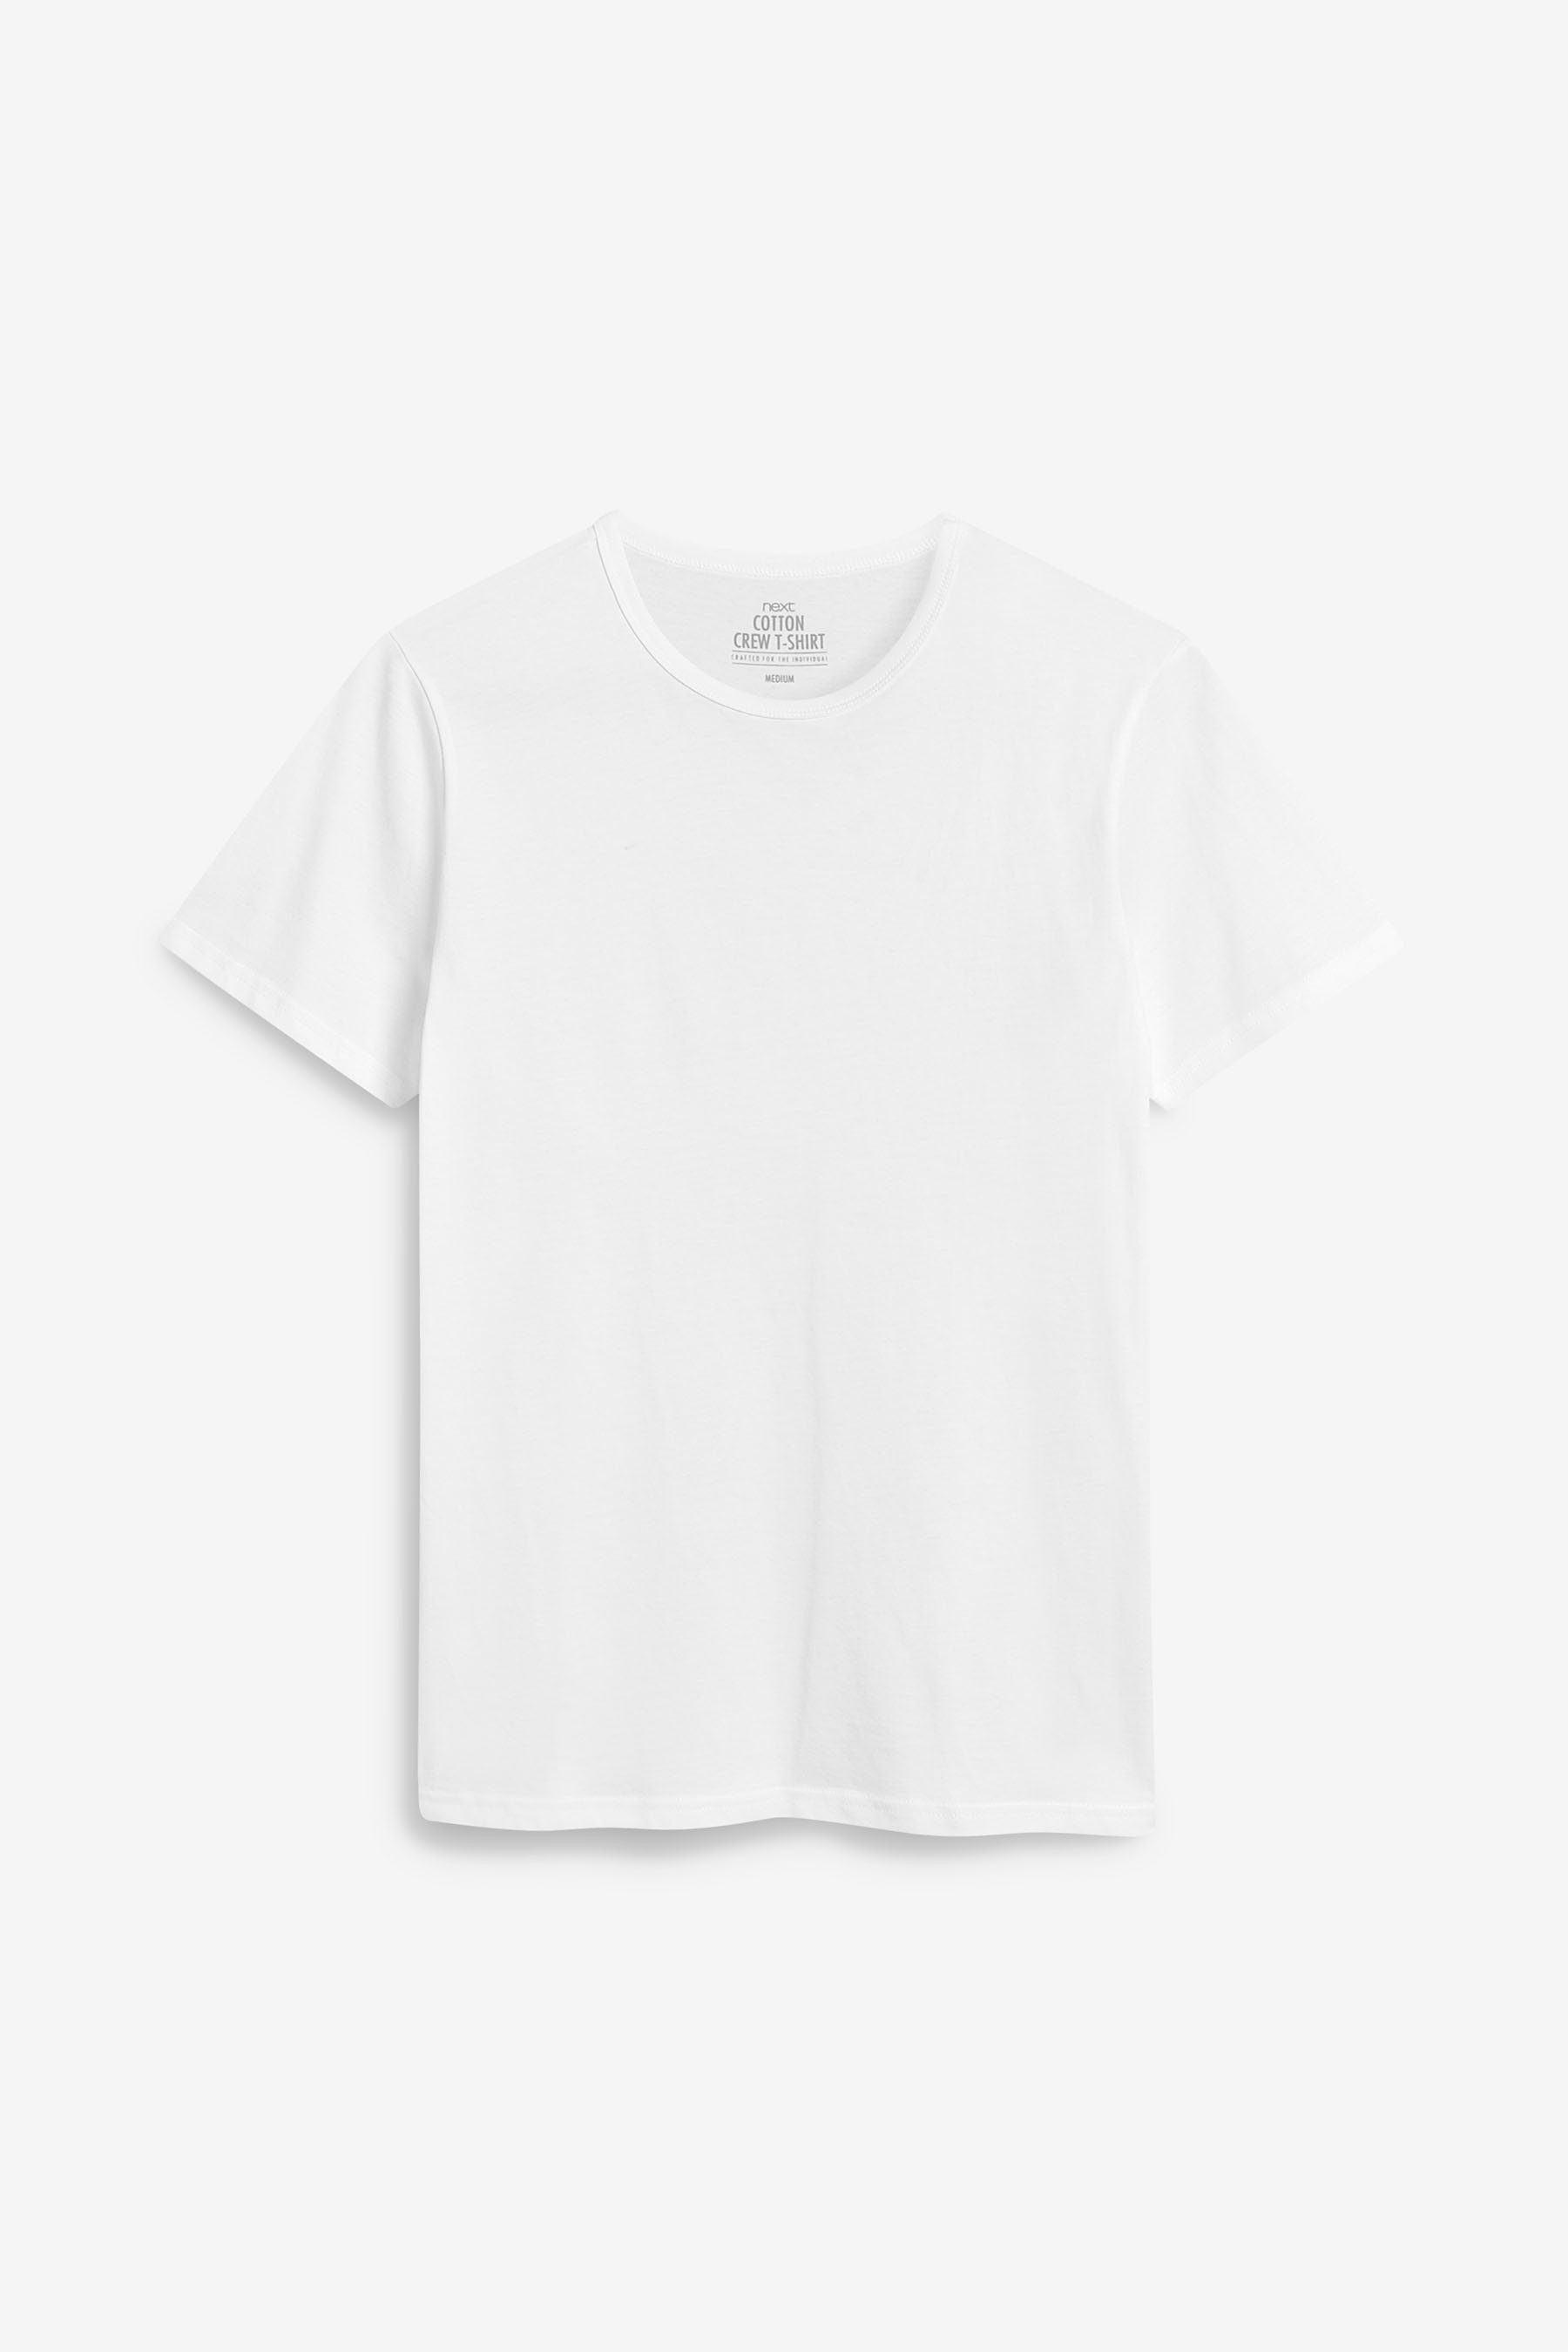 5er-Pack Next Red/Black/White/Blue/Grey Marl T-Shirts Unterhemd (5-St) Burgundy